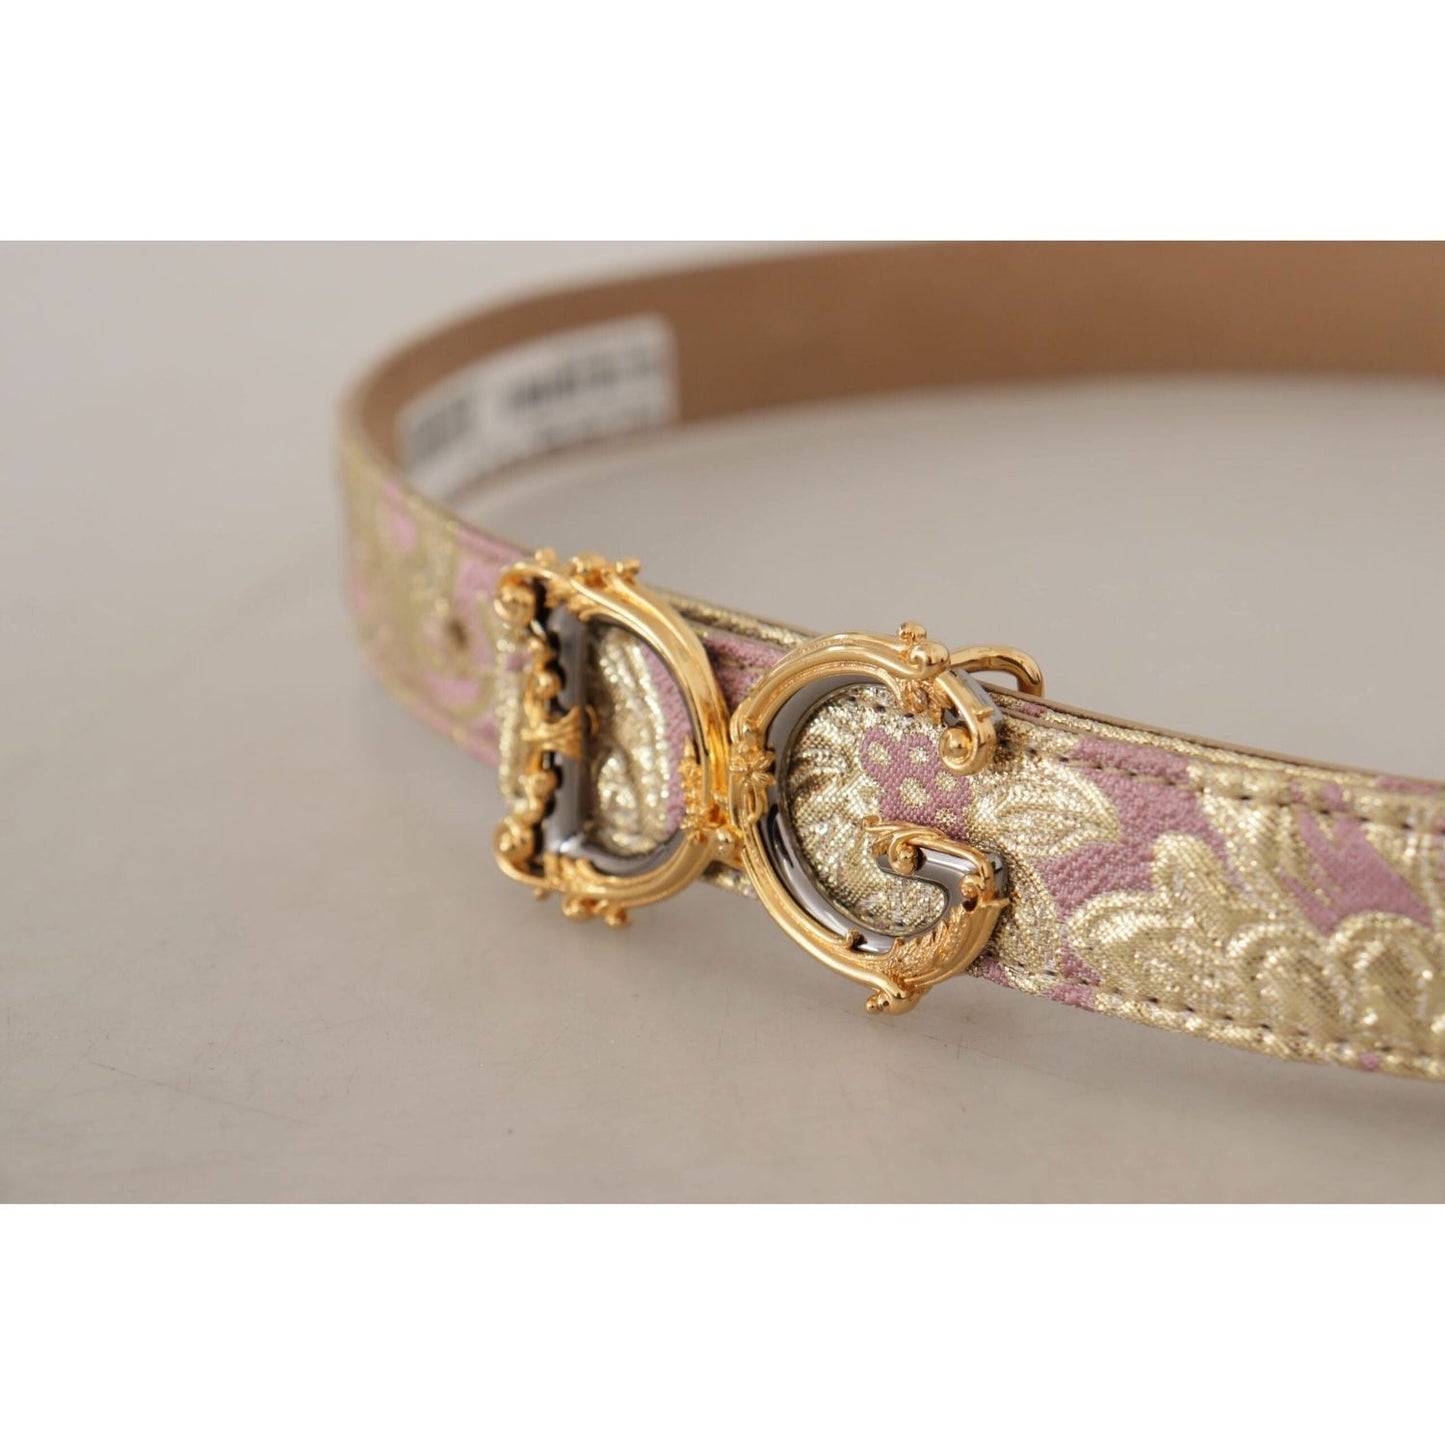 Dolce & GabbanaChic Gold and Pink Leather BeltMcRichard Designer Brands£389.00